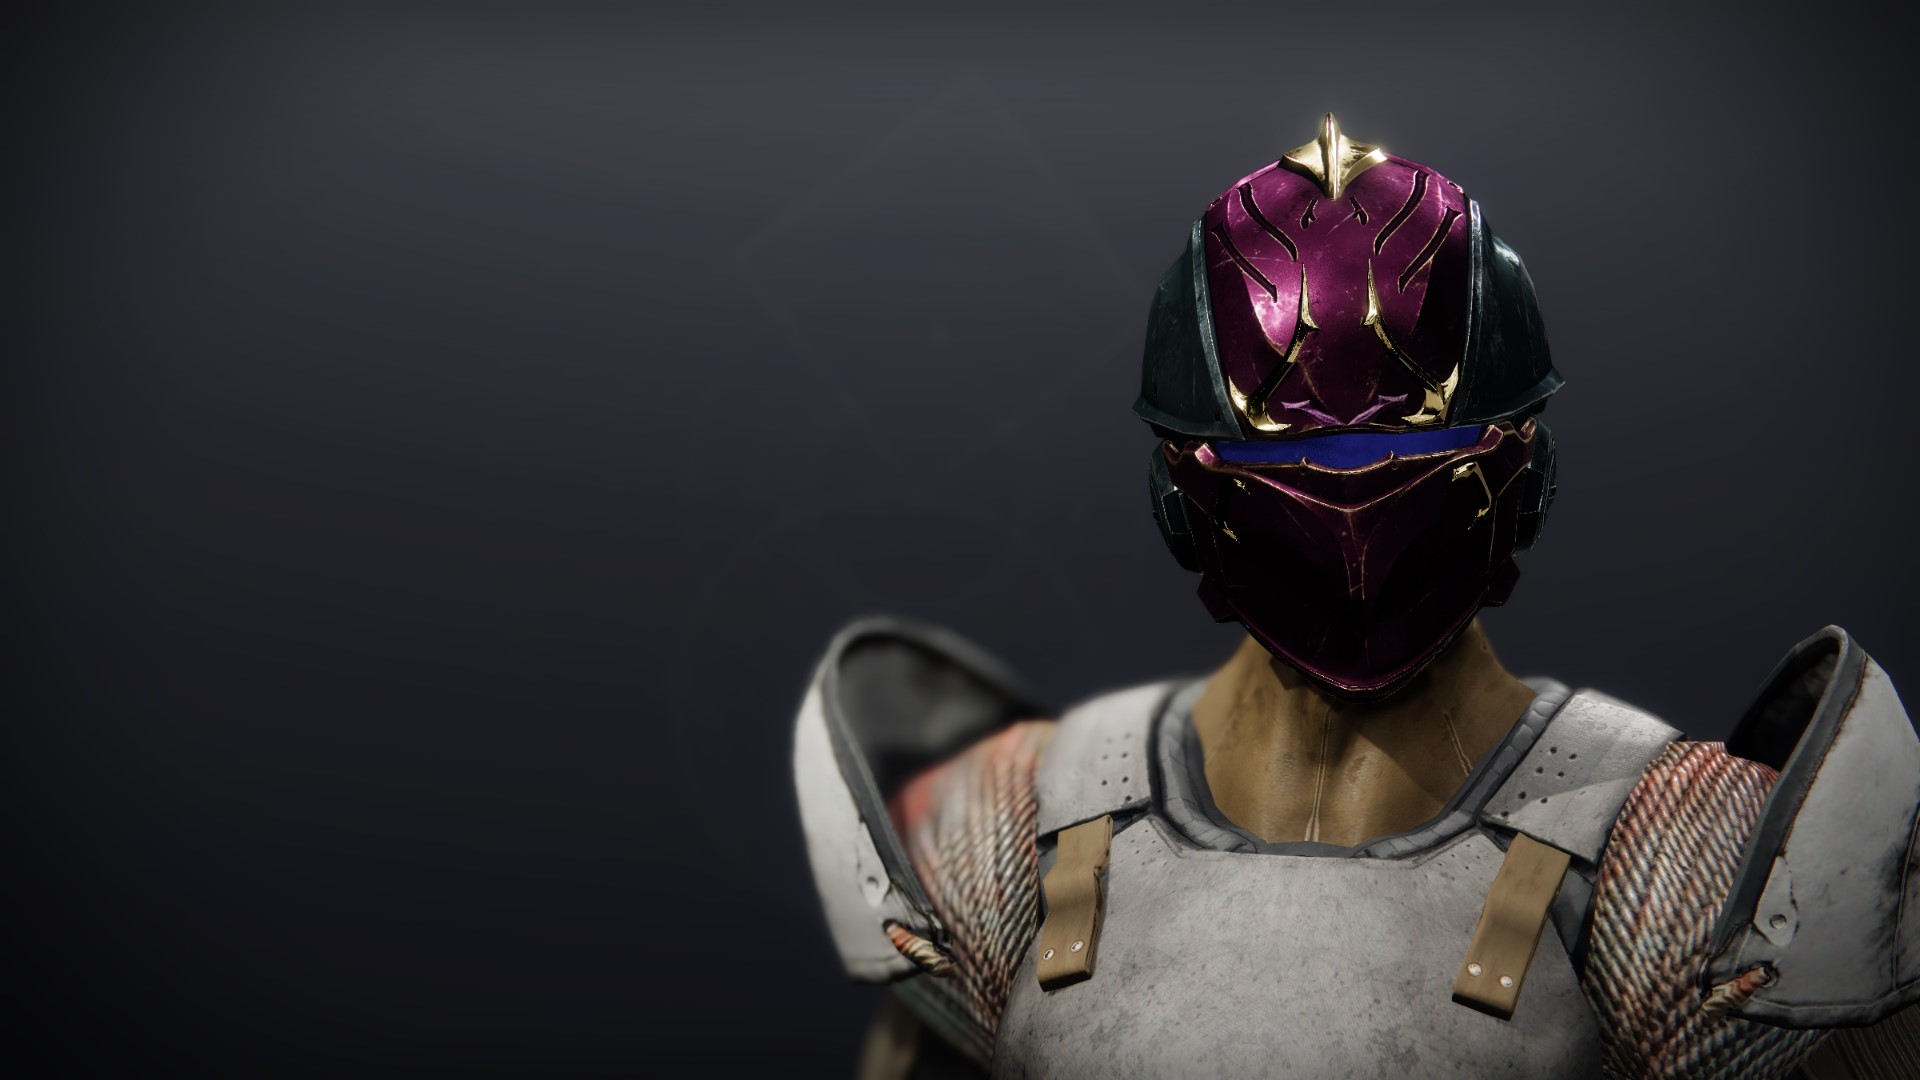 Screenshot of "Pathfinder's Helm"